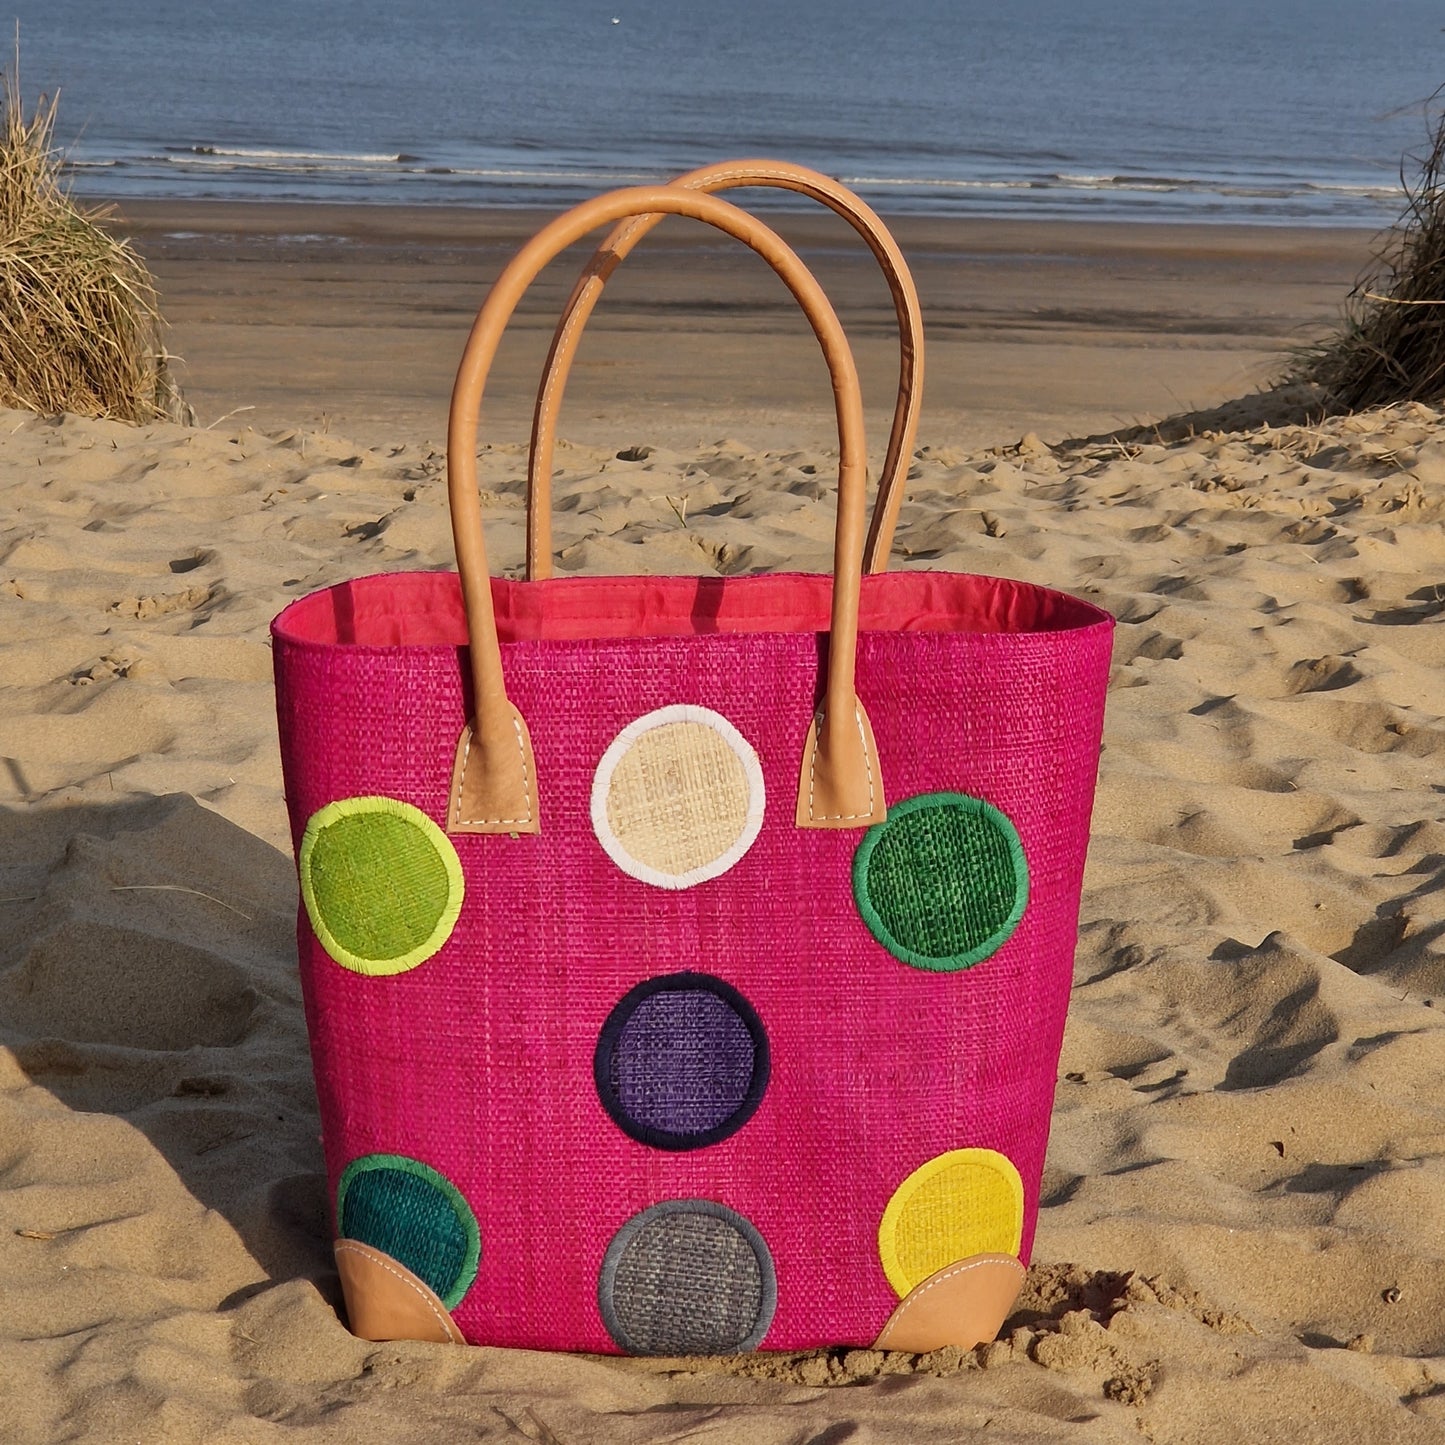 Pink raffia baskets with coloured spotty pattern.